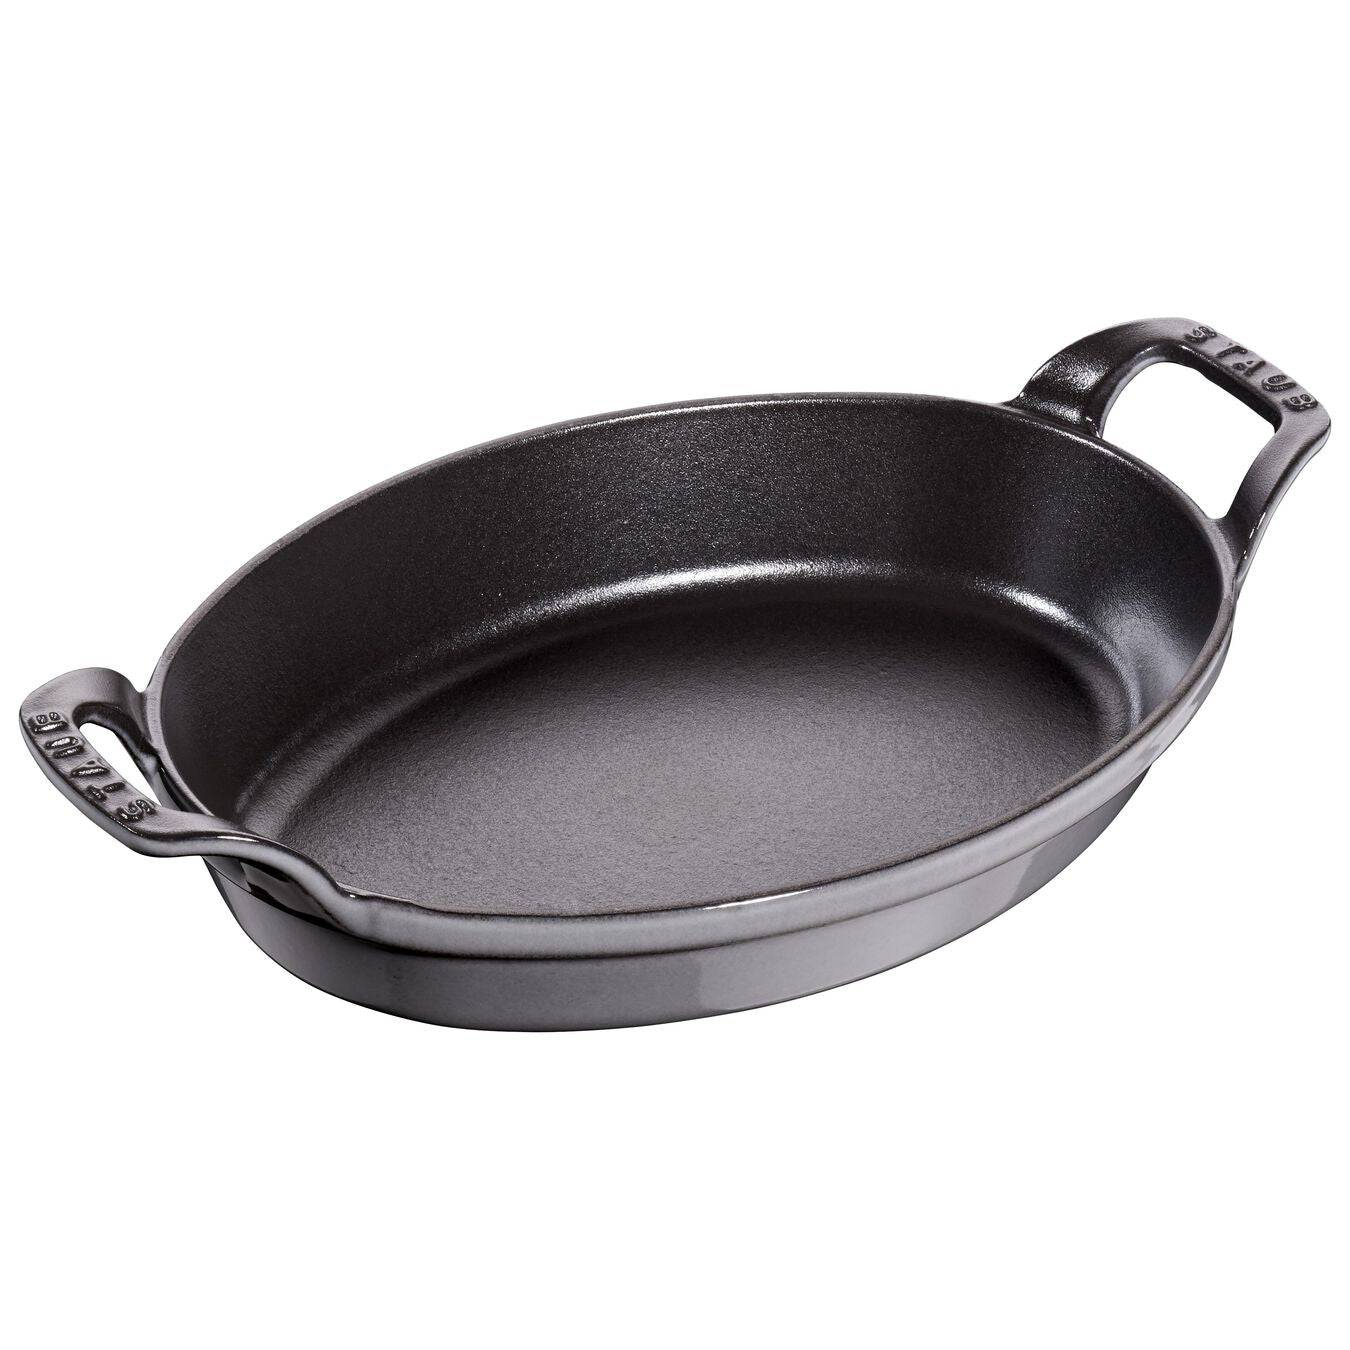 Staub Cast Iron Oval Dish Gratin Baking, 9.5-in x 6.75-in, Graphite Grey - Kitchen Universe